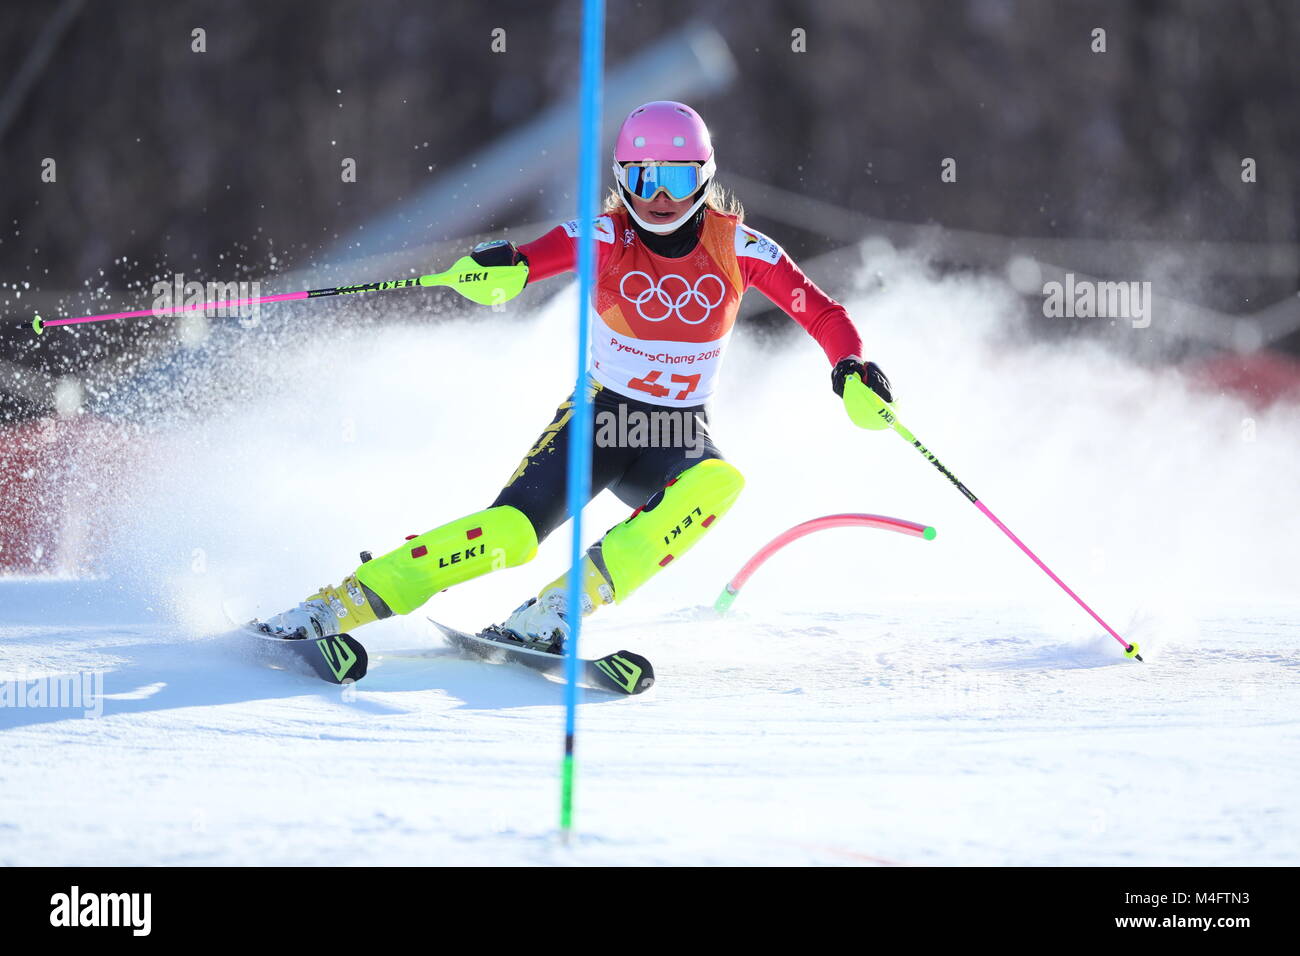 Yongpyong, South Korea. 16th Feb, 2018. Kim Vanreusel of Belgium in the 1st heat of the women's Slalom alpine skiing event during the Pyeongchang 2018 winter olympics in Yongpyong, South Korea, 16 February 2018. Credit: Michael Kappeler/dpa/Alamy Live News Stock Photo